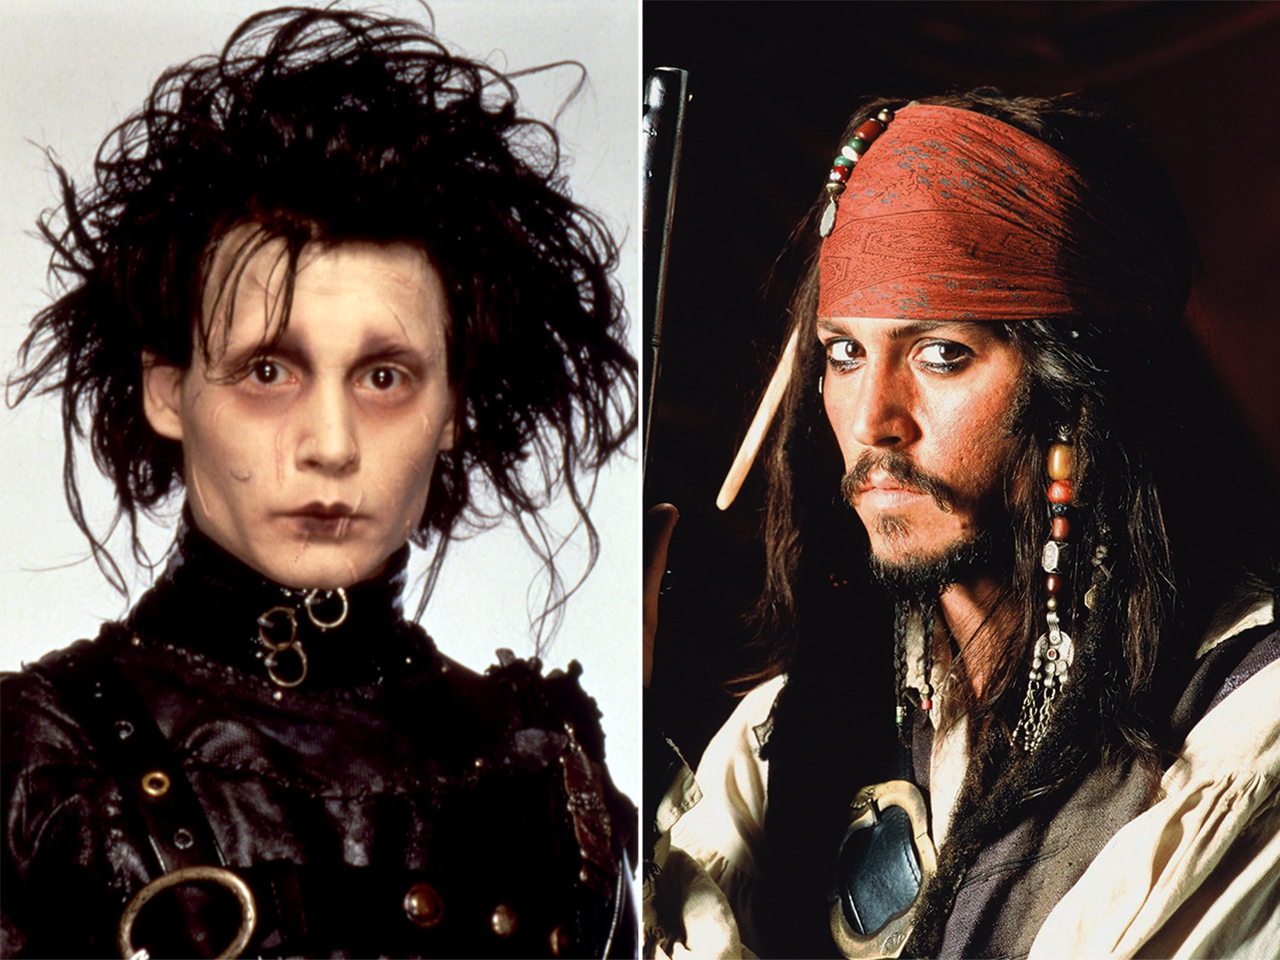 Johnny Depp roles